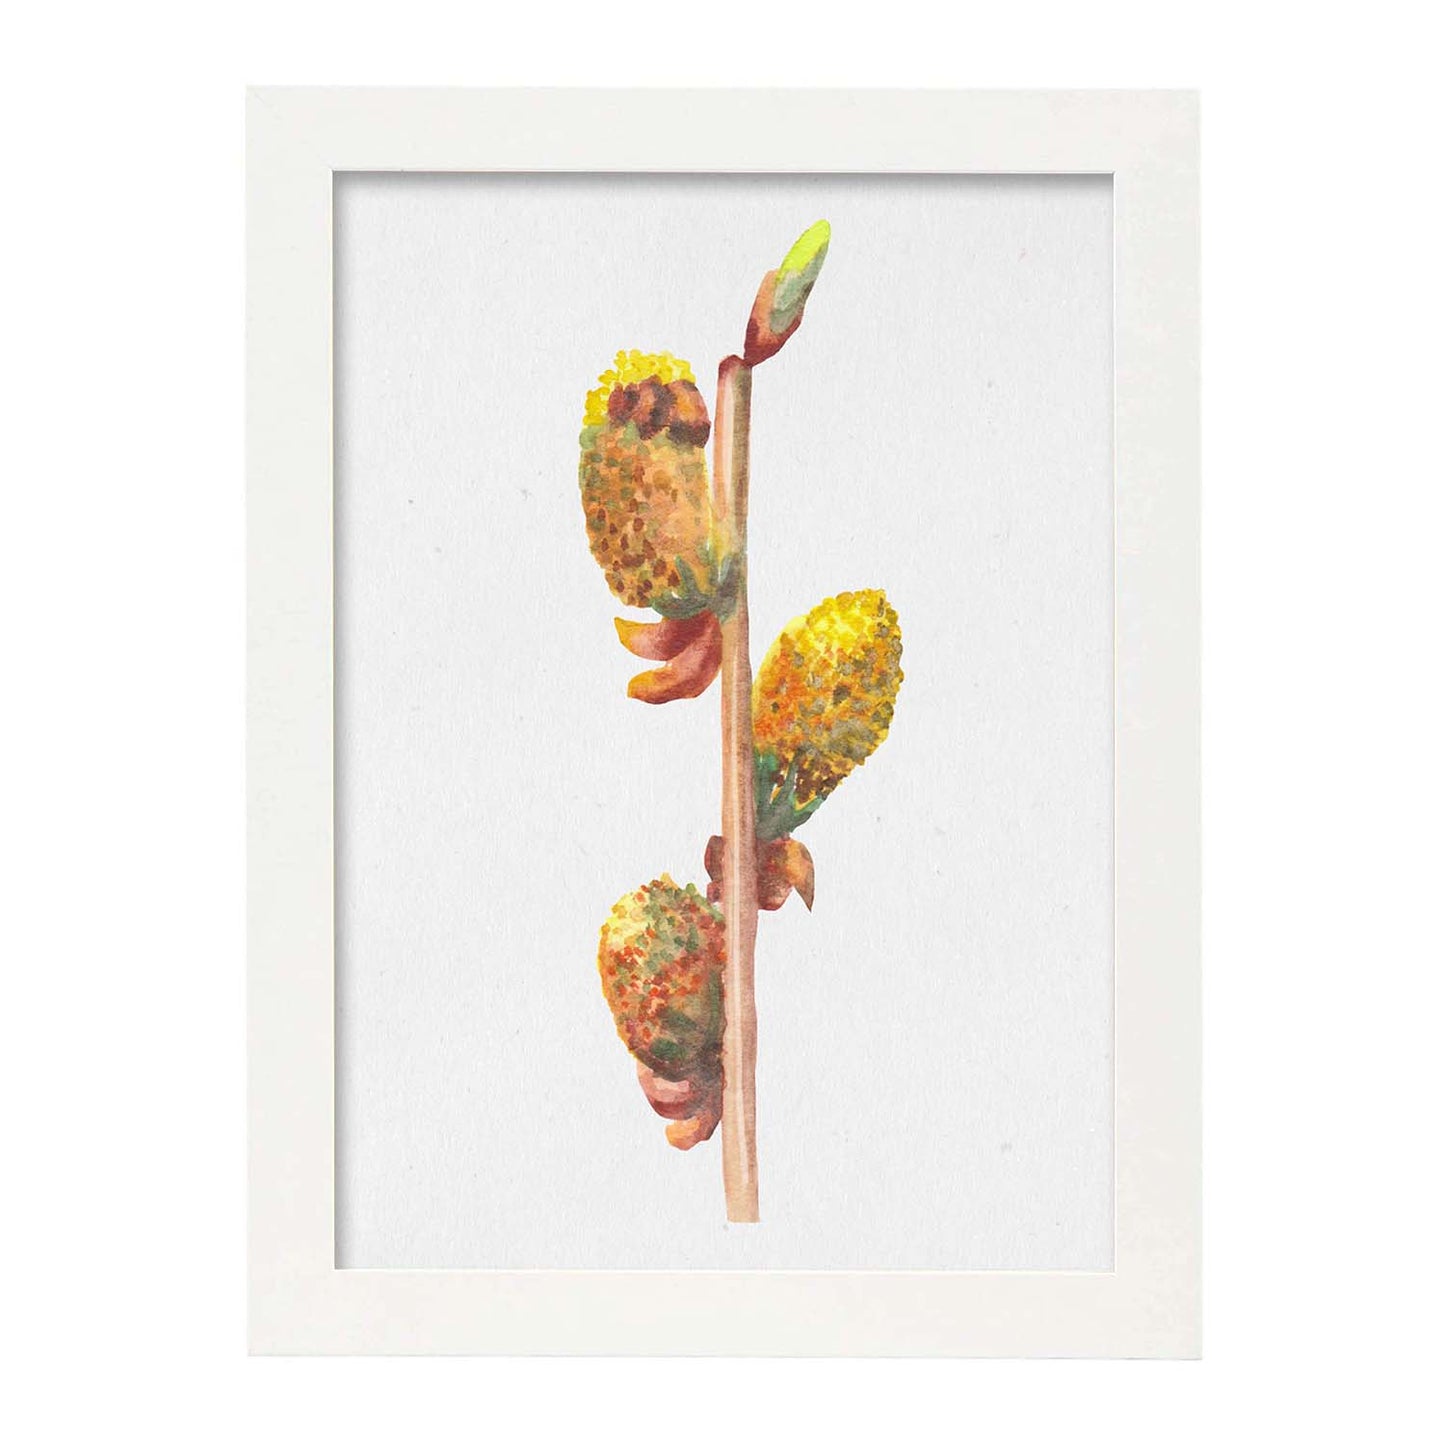 Poster de ramas con estilo de óleo. Lámina Ramas 7, con dibujos pintados de ramas, hojas, y flores.-Artwork-Nacnic-A3-Marco Blanco-Nacnic Estudio SL